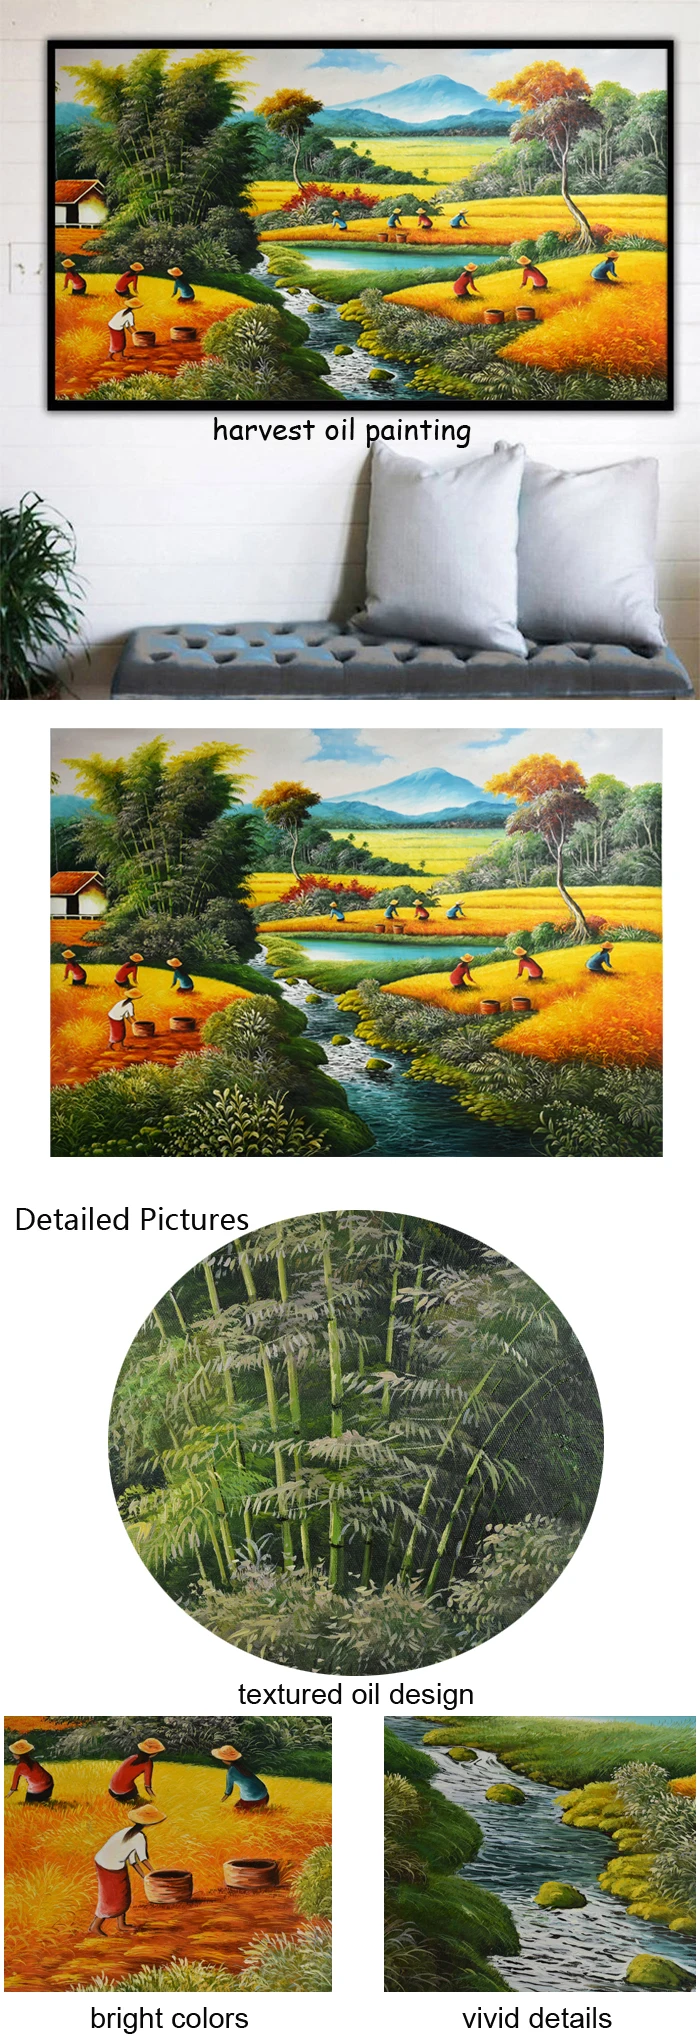 rice field harvest painting